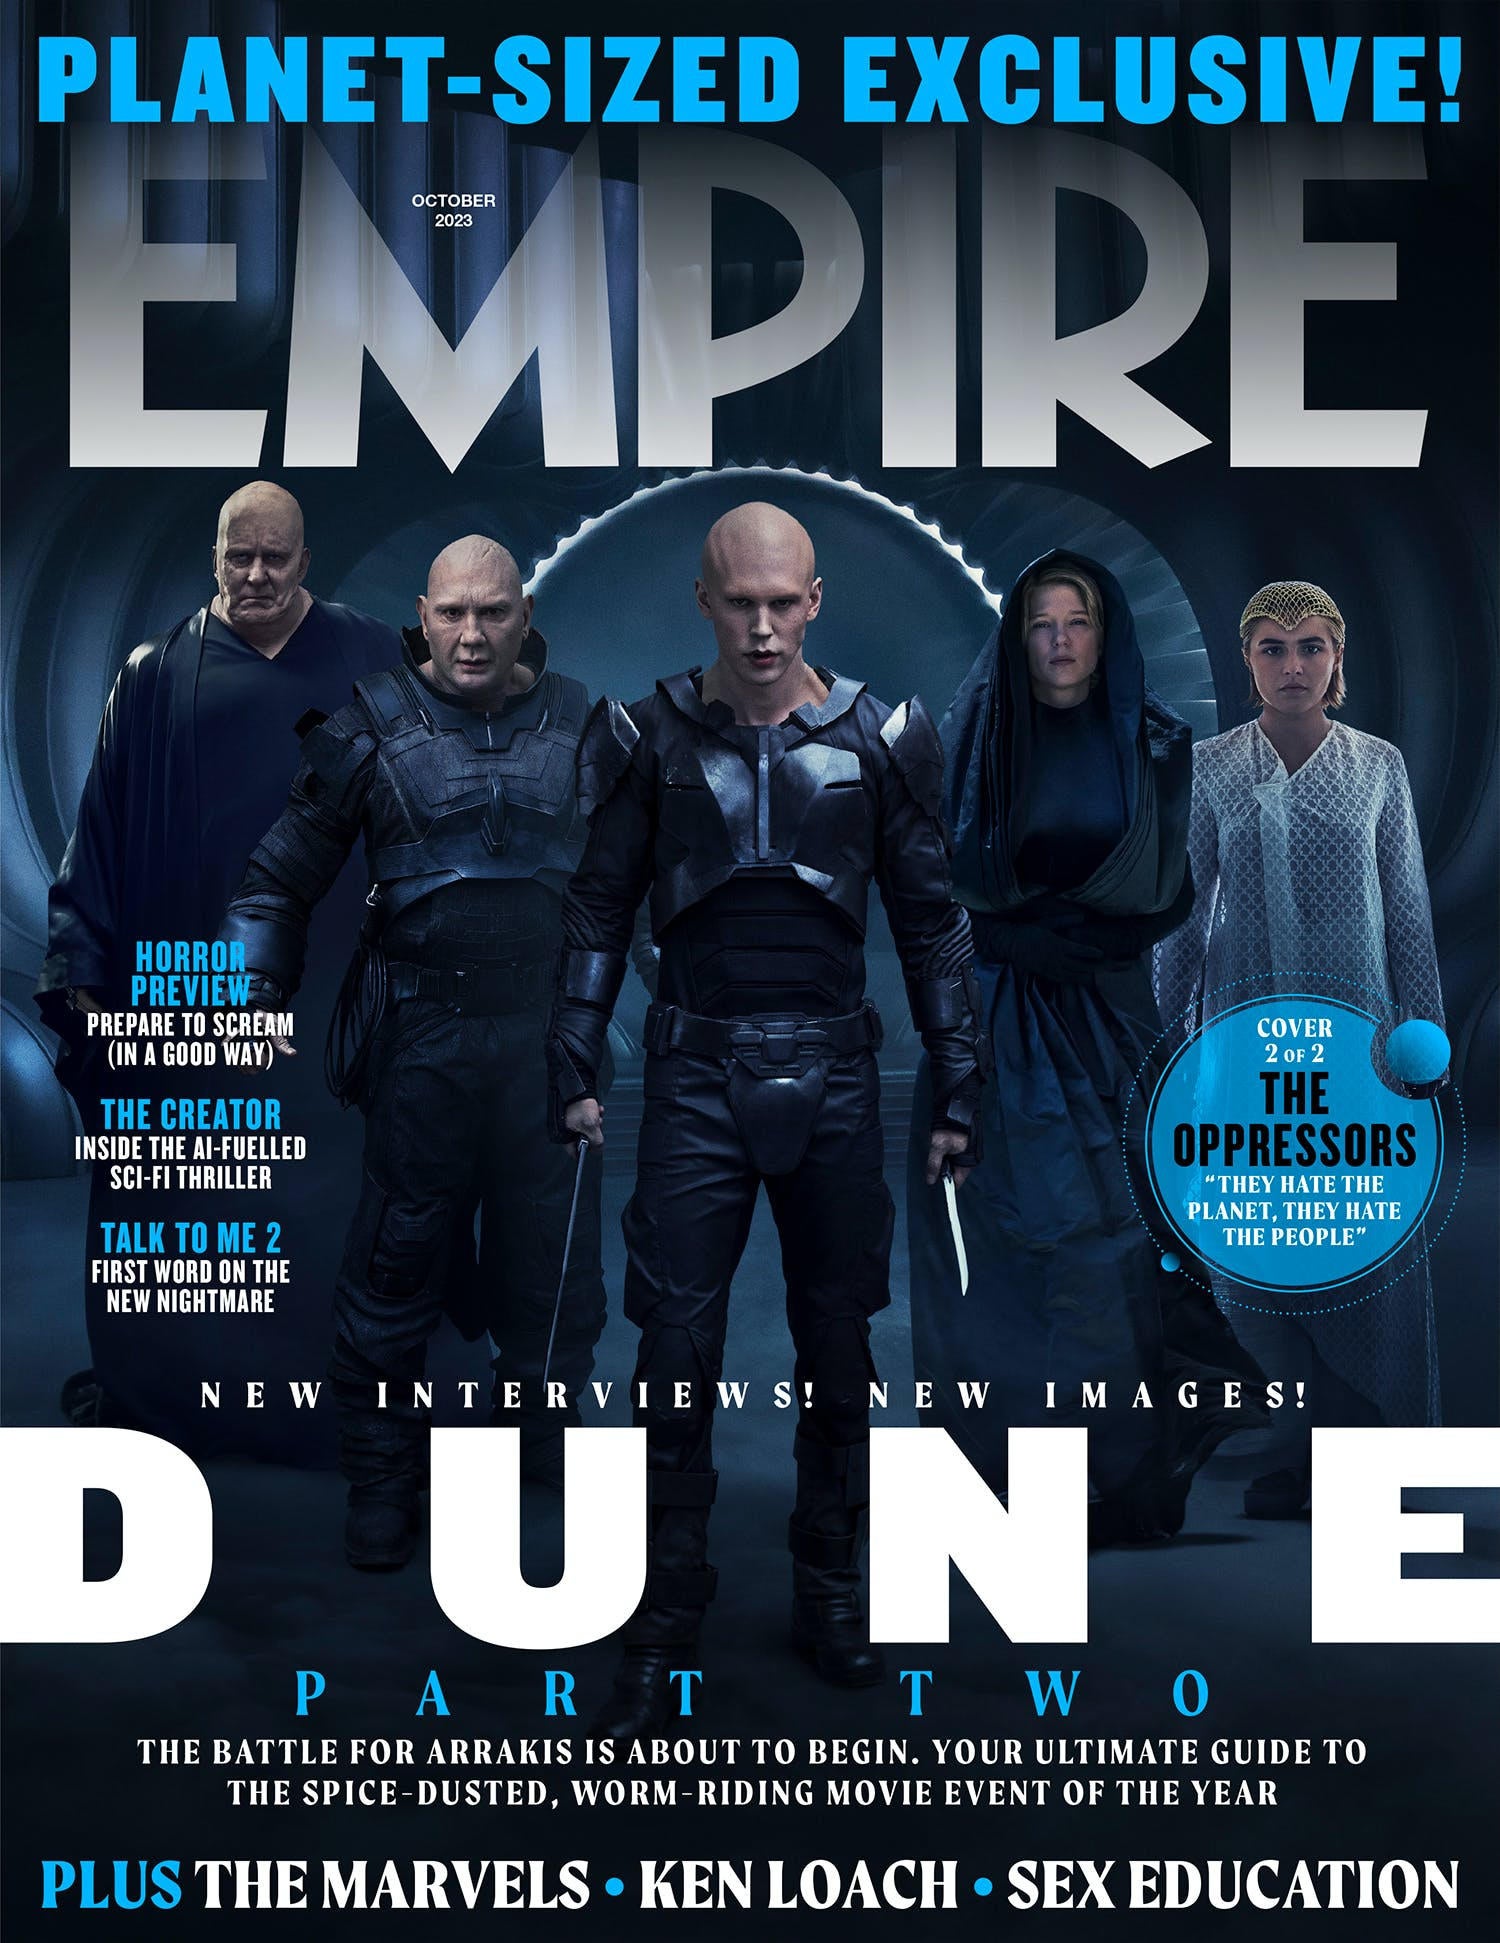 duna-parte-dois-empire-magazine-cover-oppressors.jpg